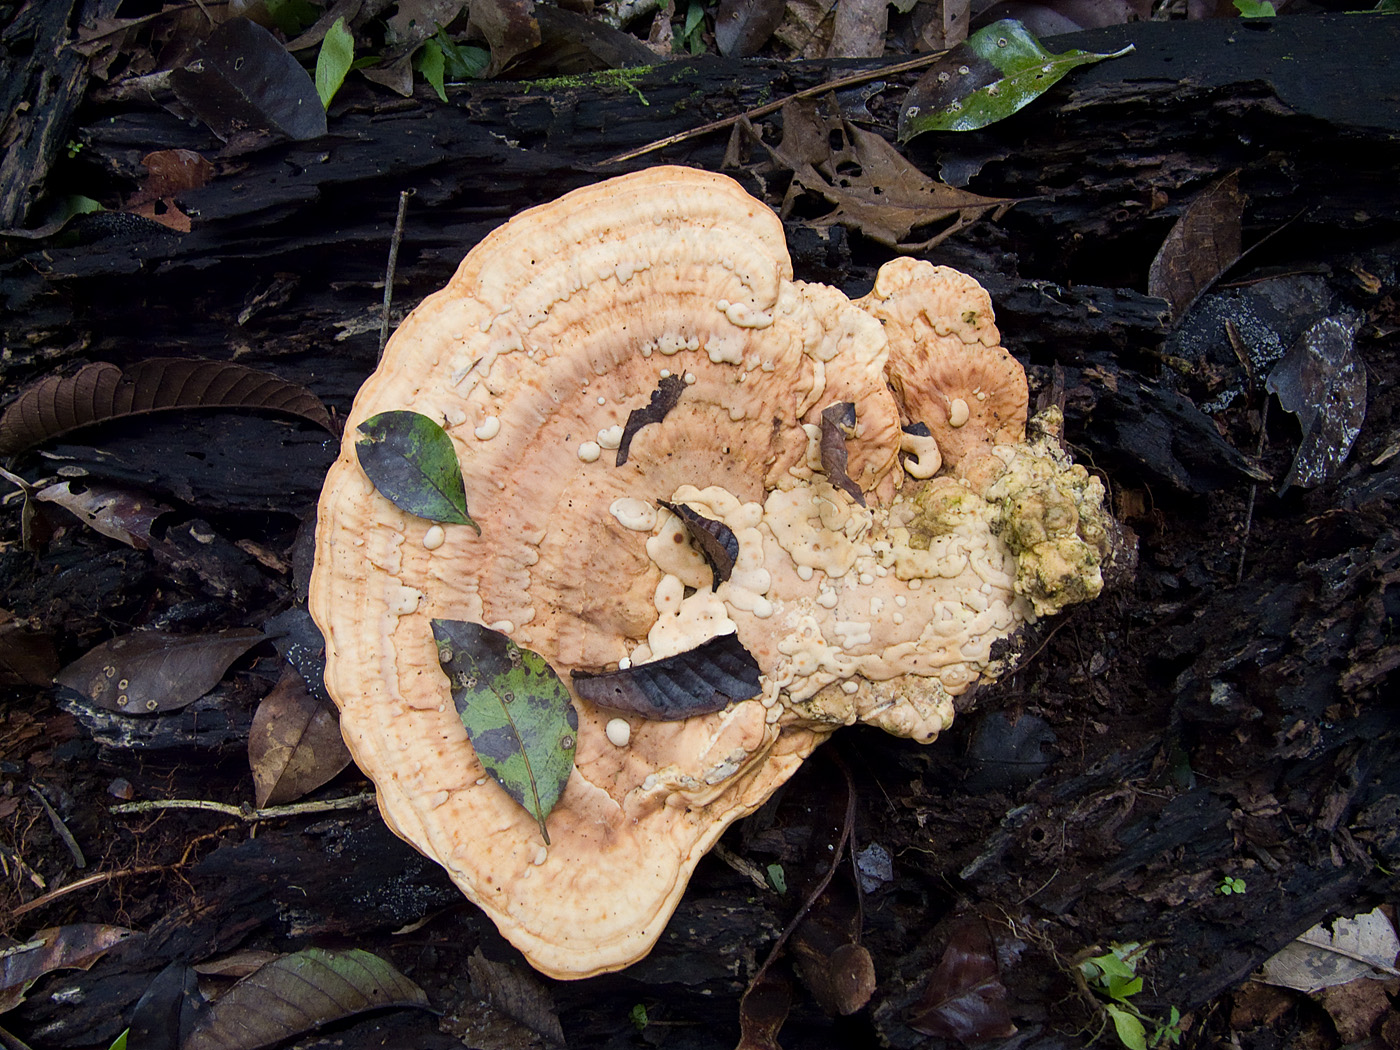 Fungus, Tambopata National Reserve